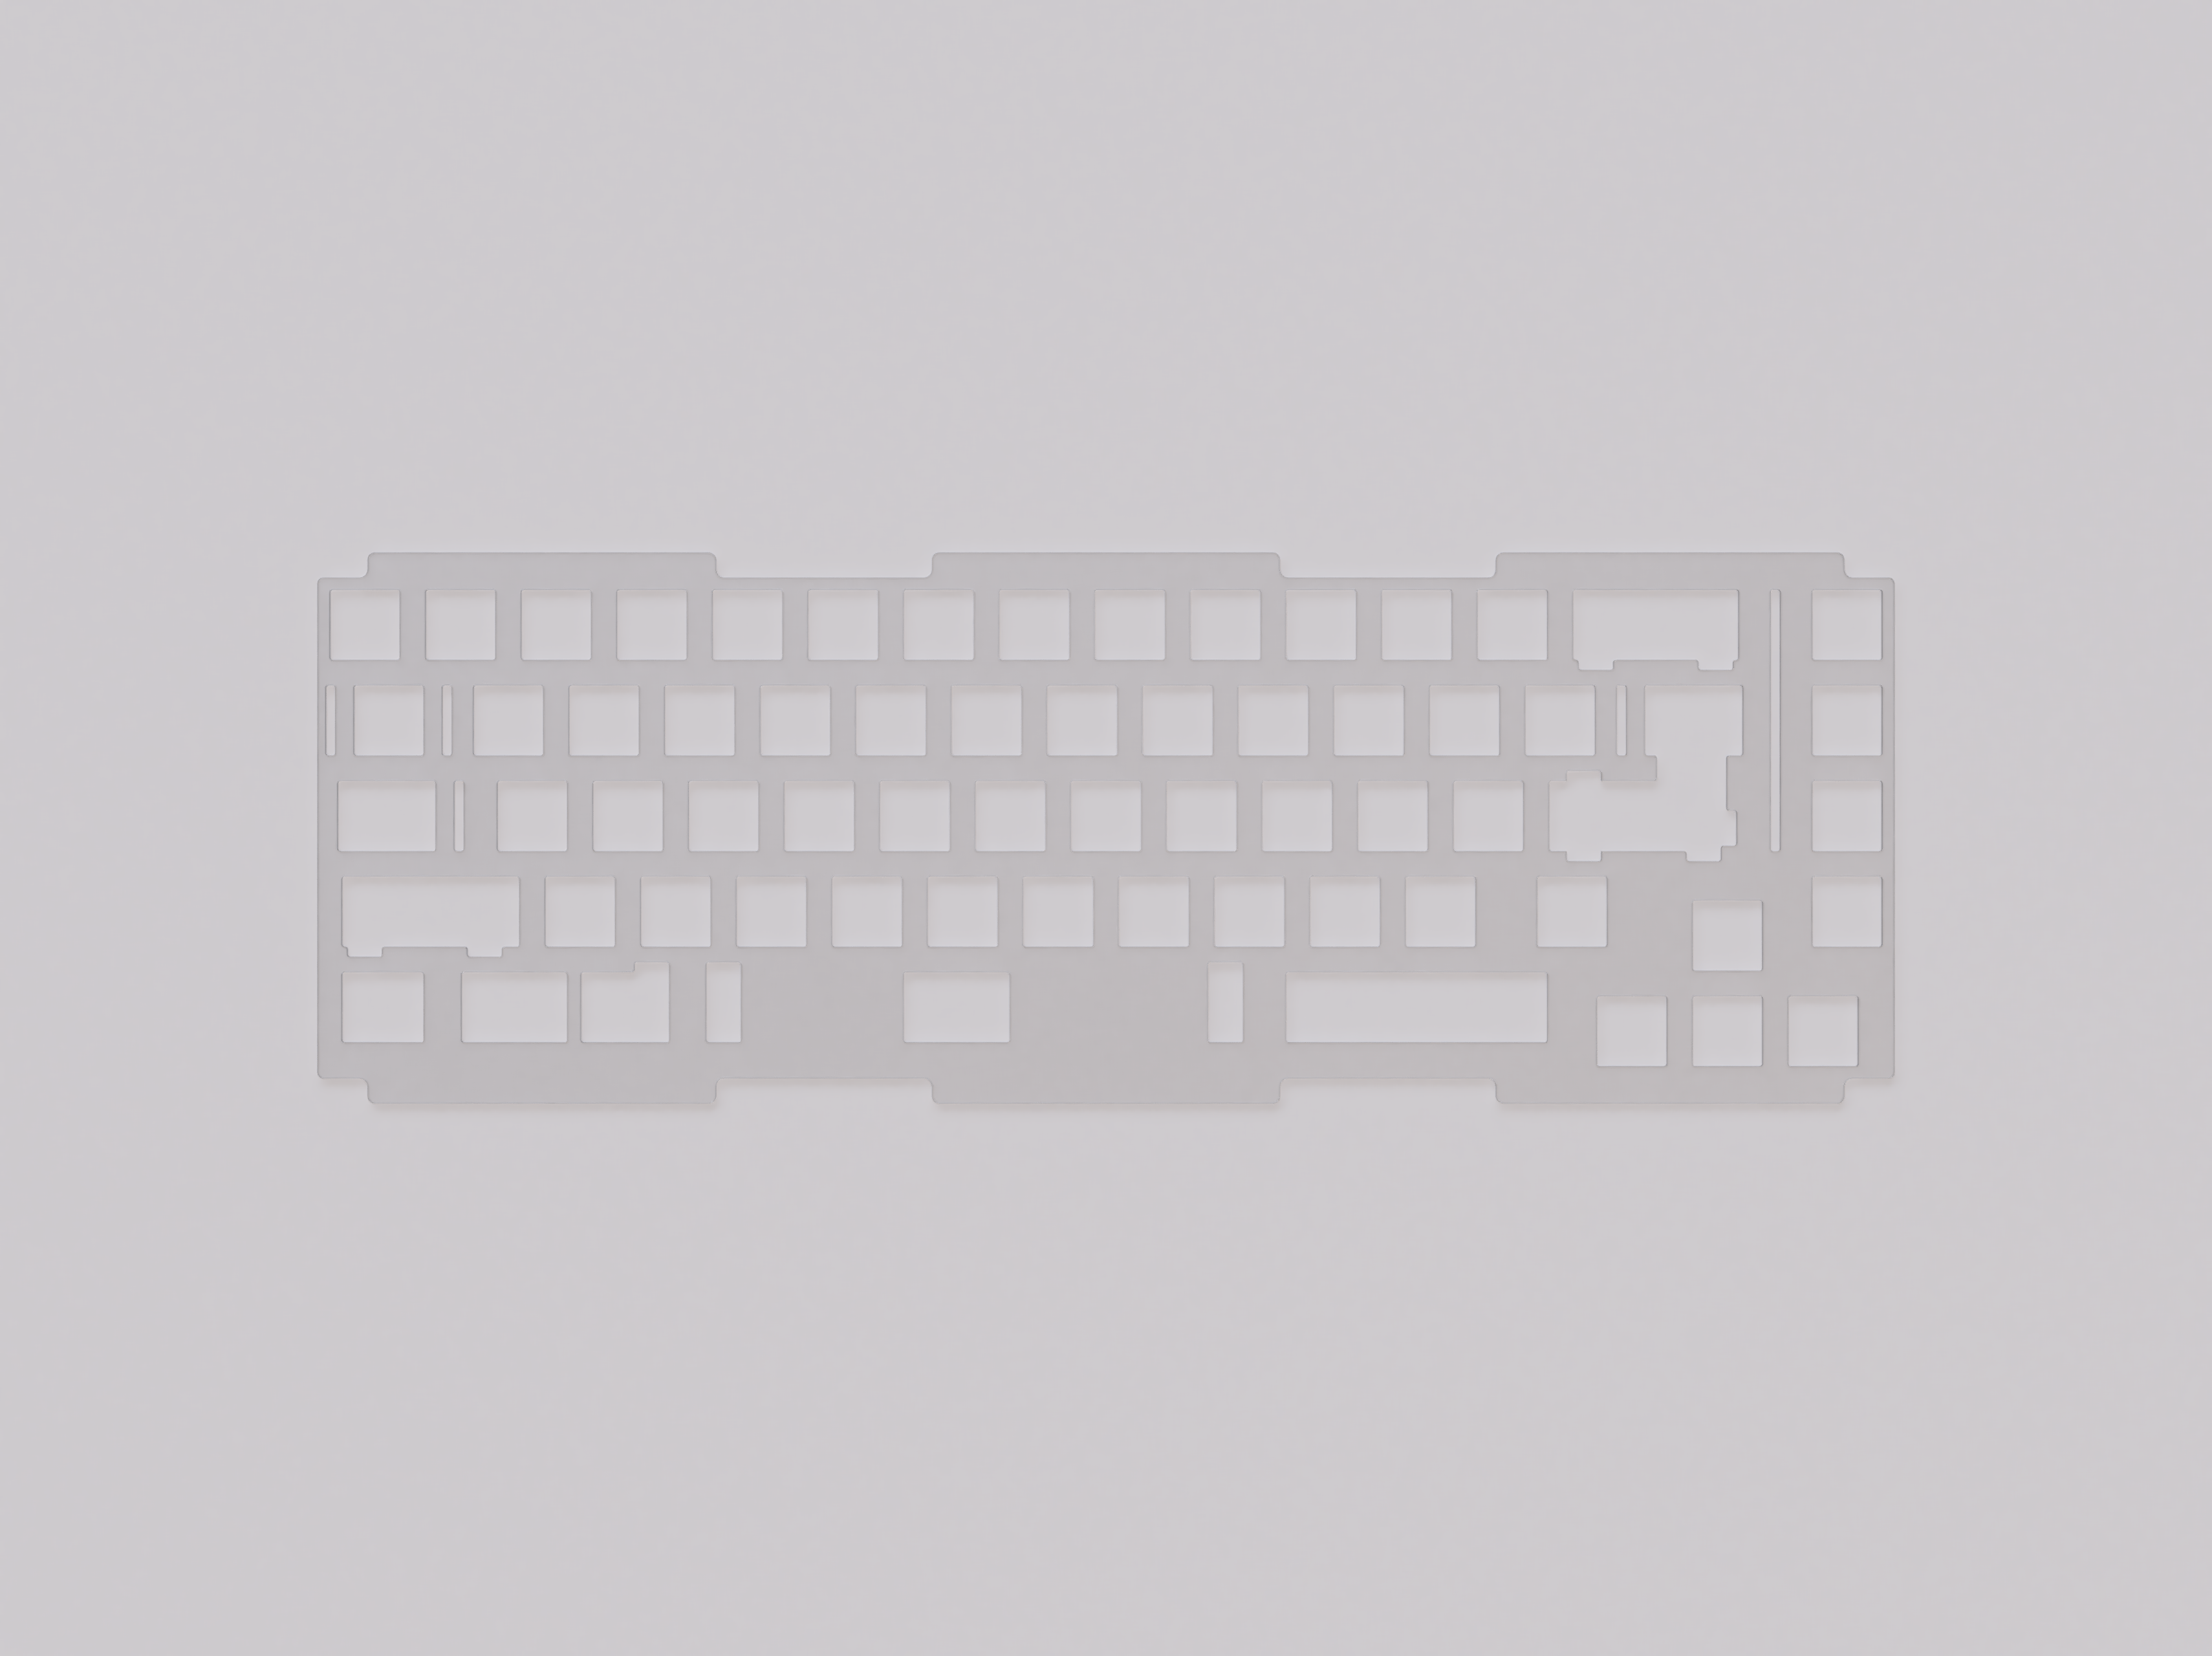 [In Stock] Gentoo Keyboard Extras